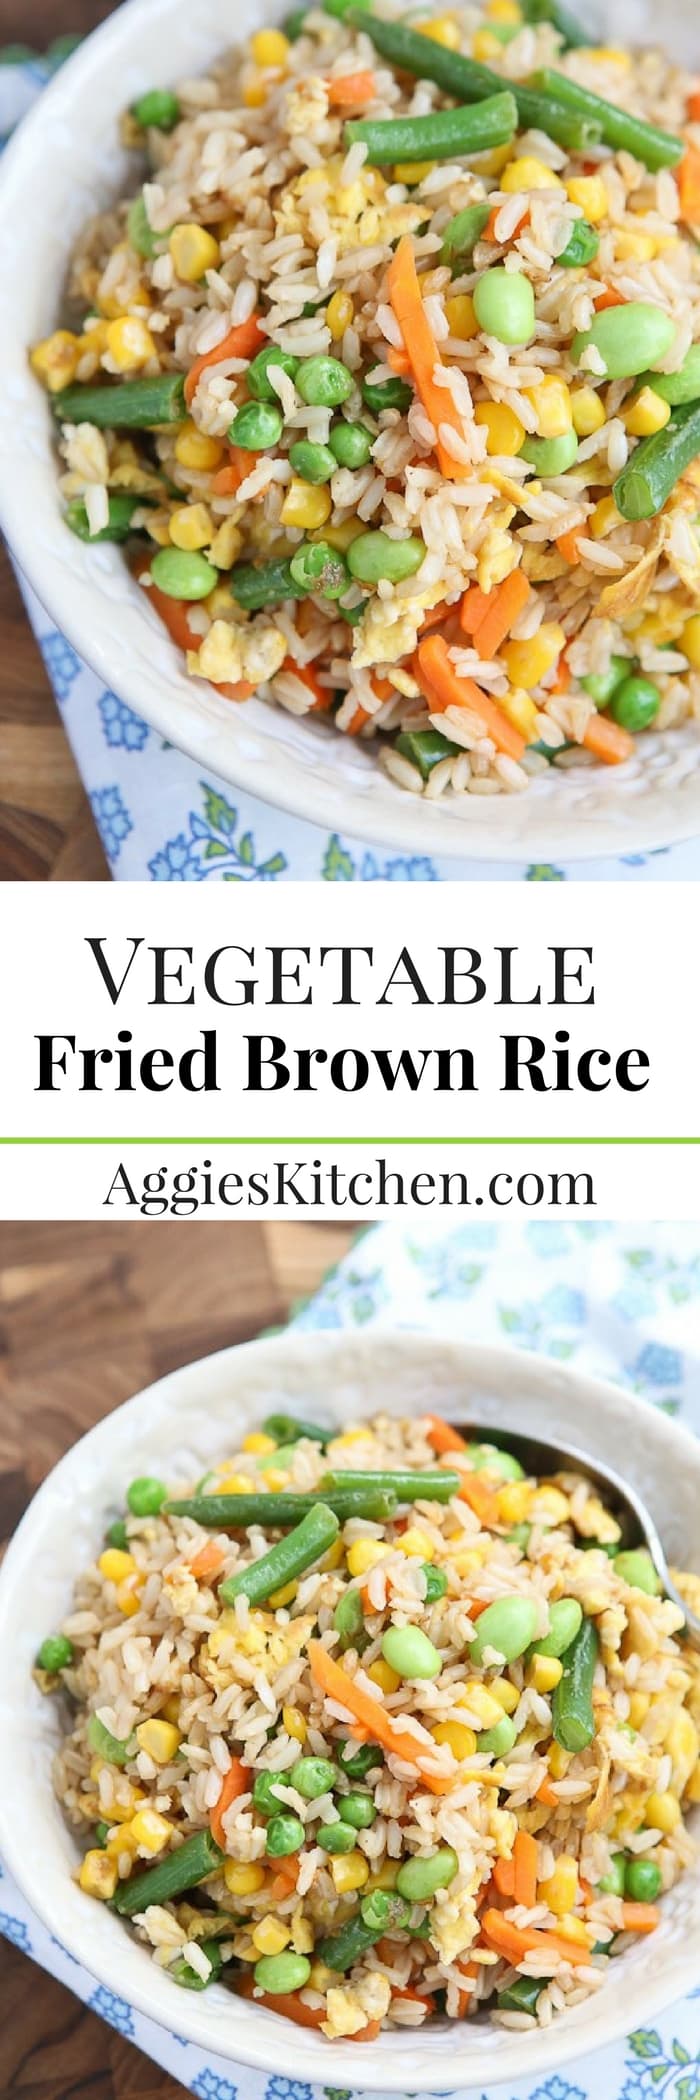 5-Ingredient Vegetable Fried Brown Rice - Aggie's Kitchen